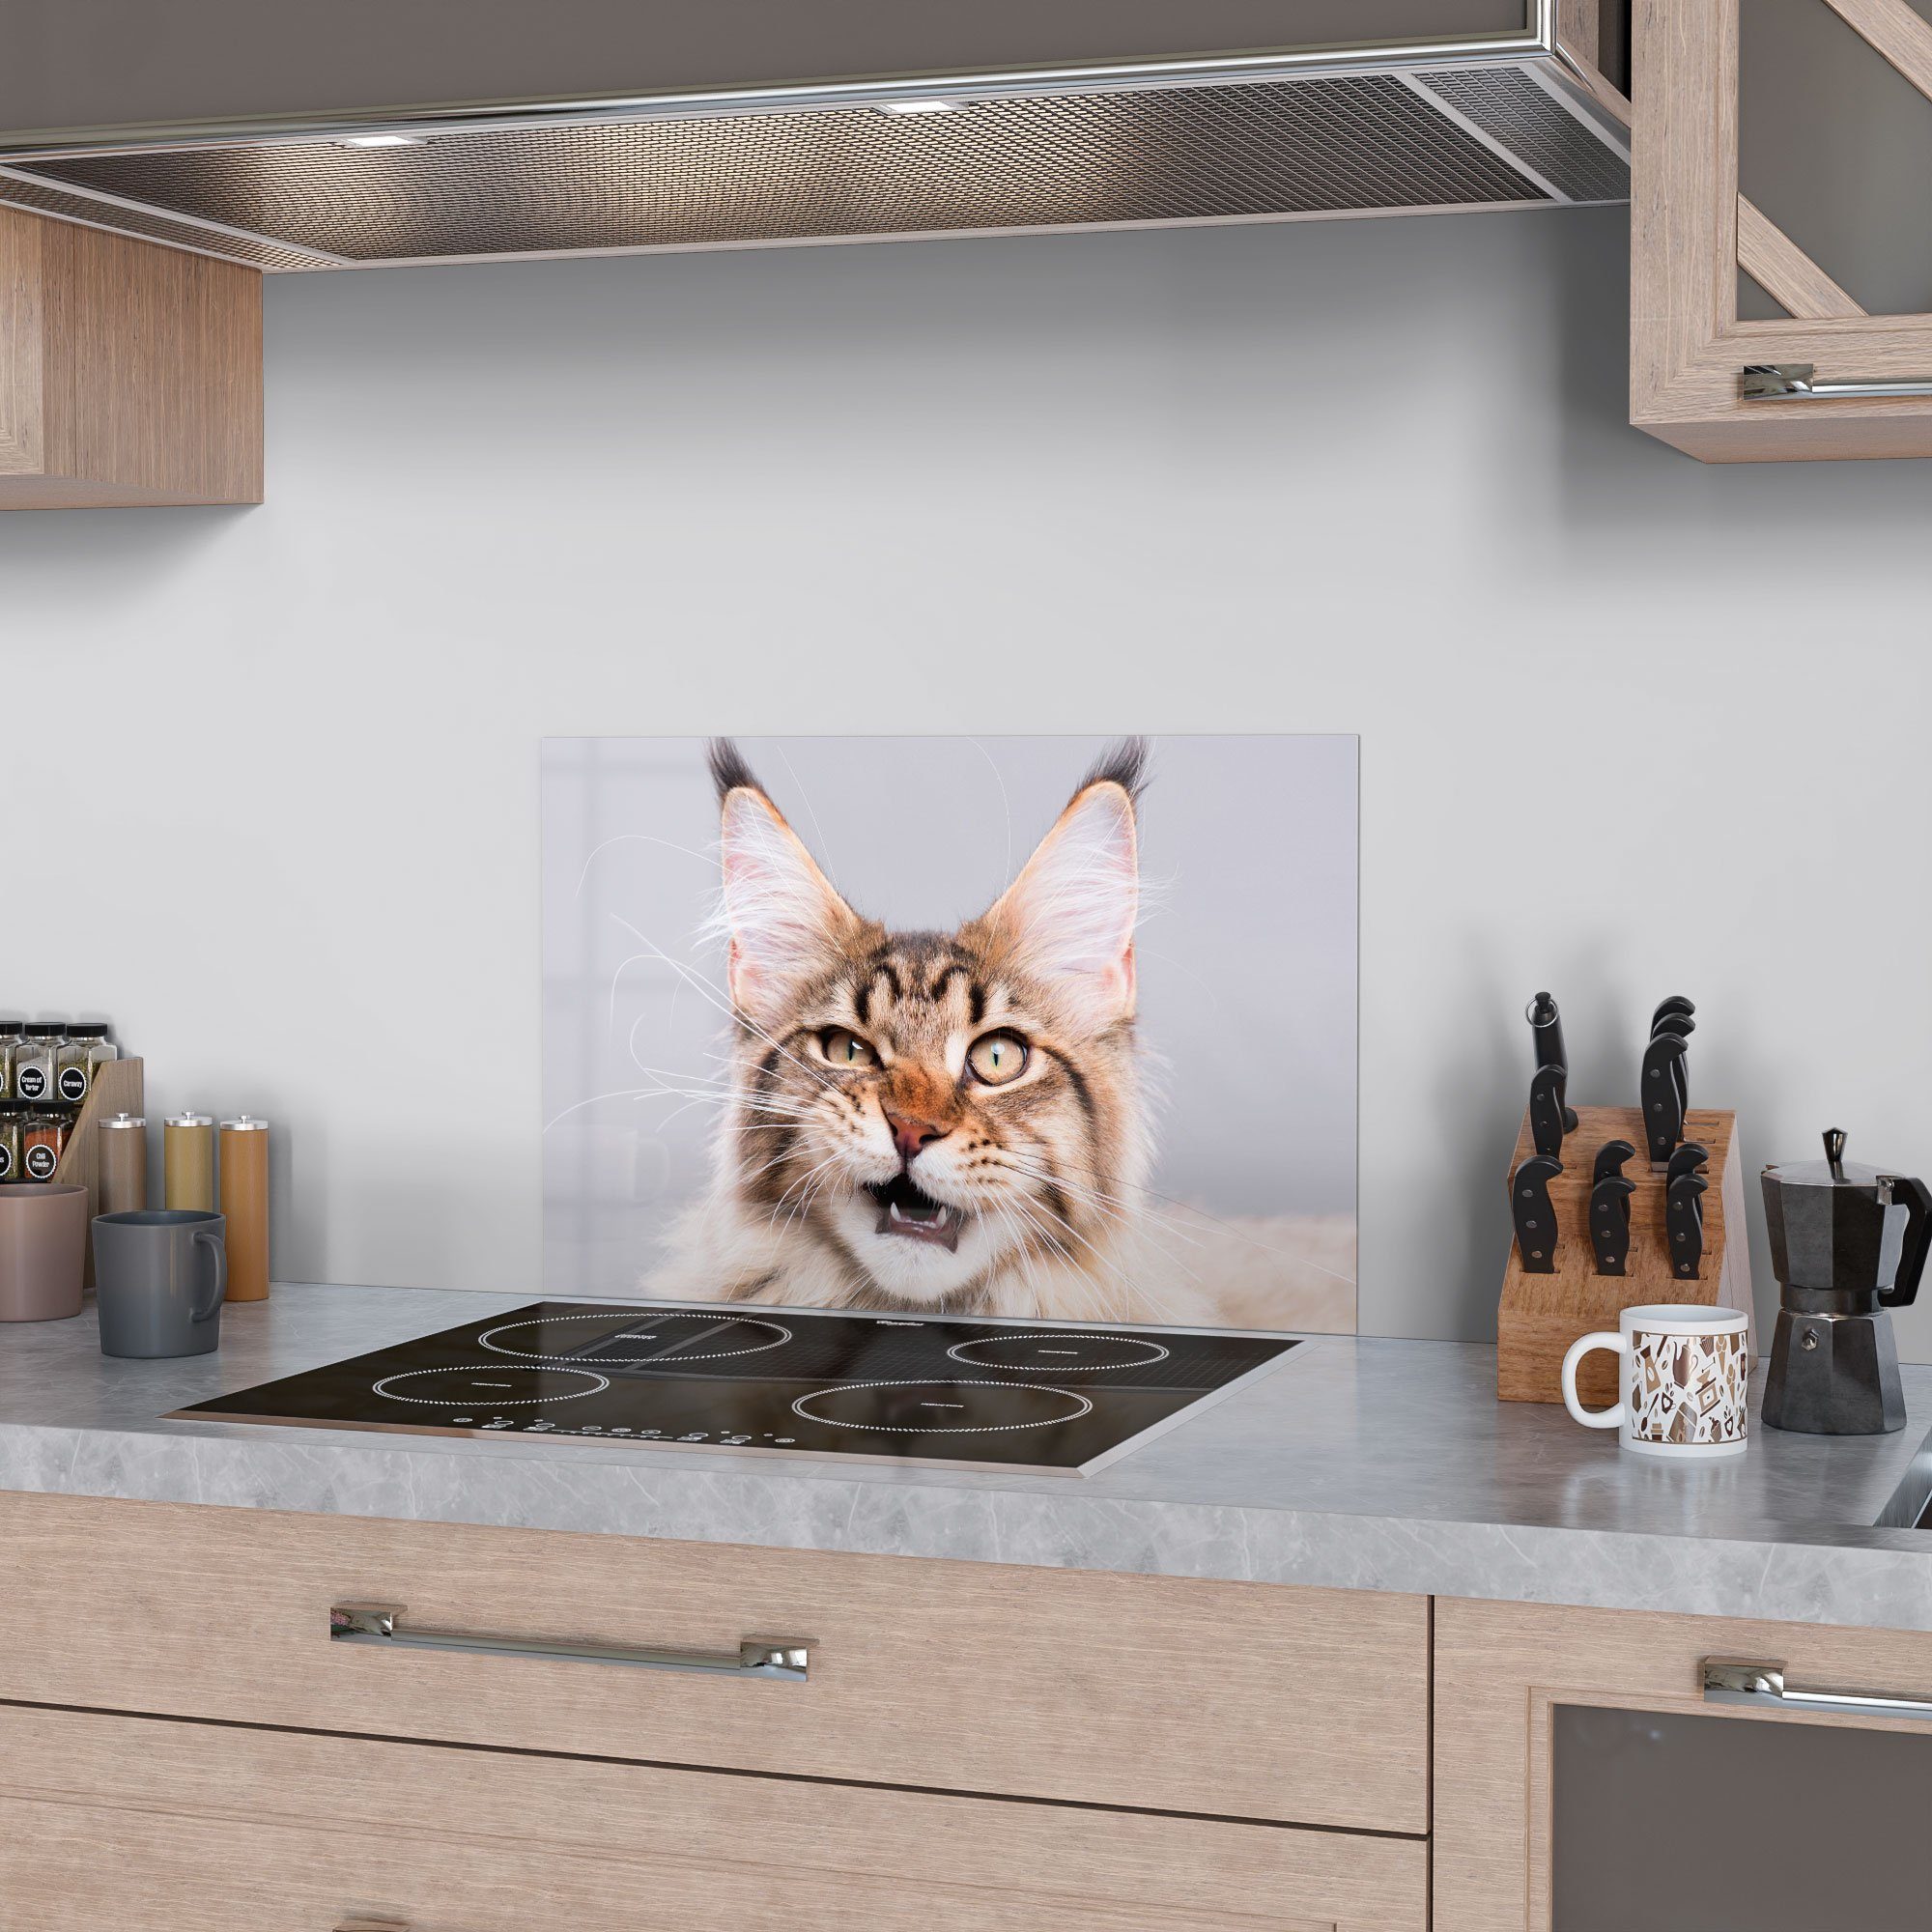 faucht', DEQORI 'Maine Coon Glas Herdblende Badrückwand Küchenrückwand Katze Spritzschutz